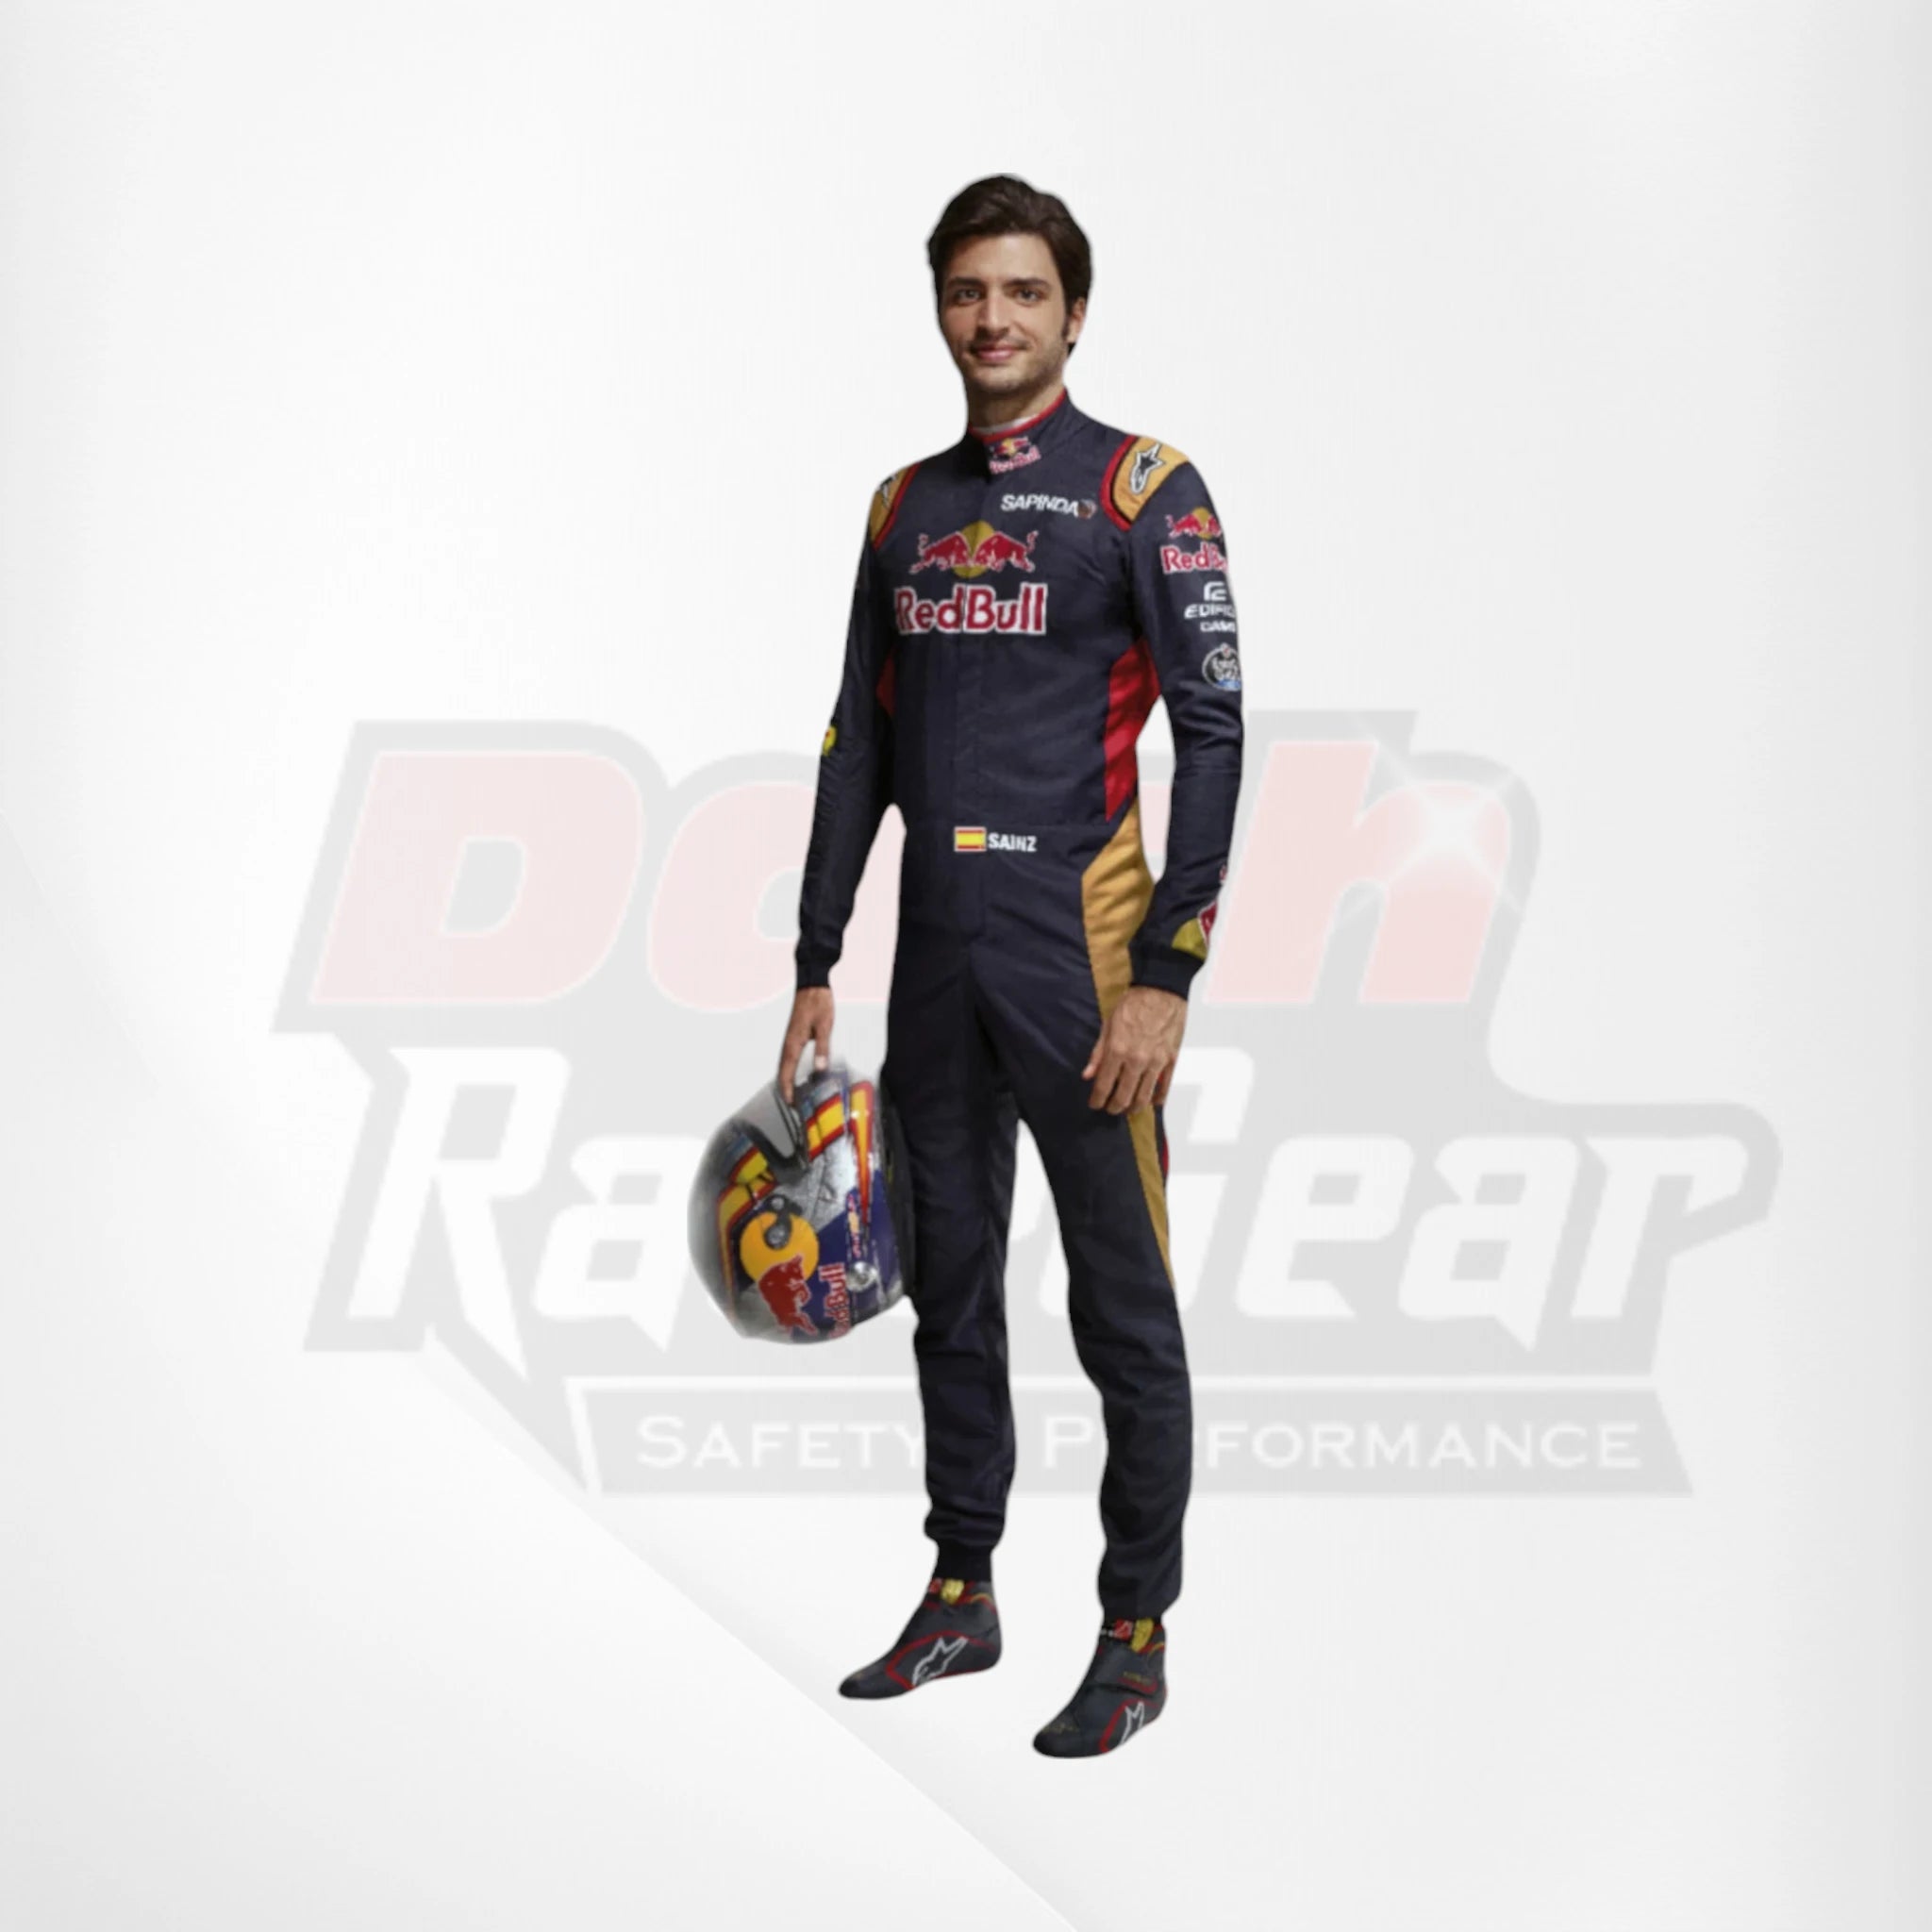 2015 Red Bull Carlos Sainz F1 Race Suit